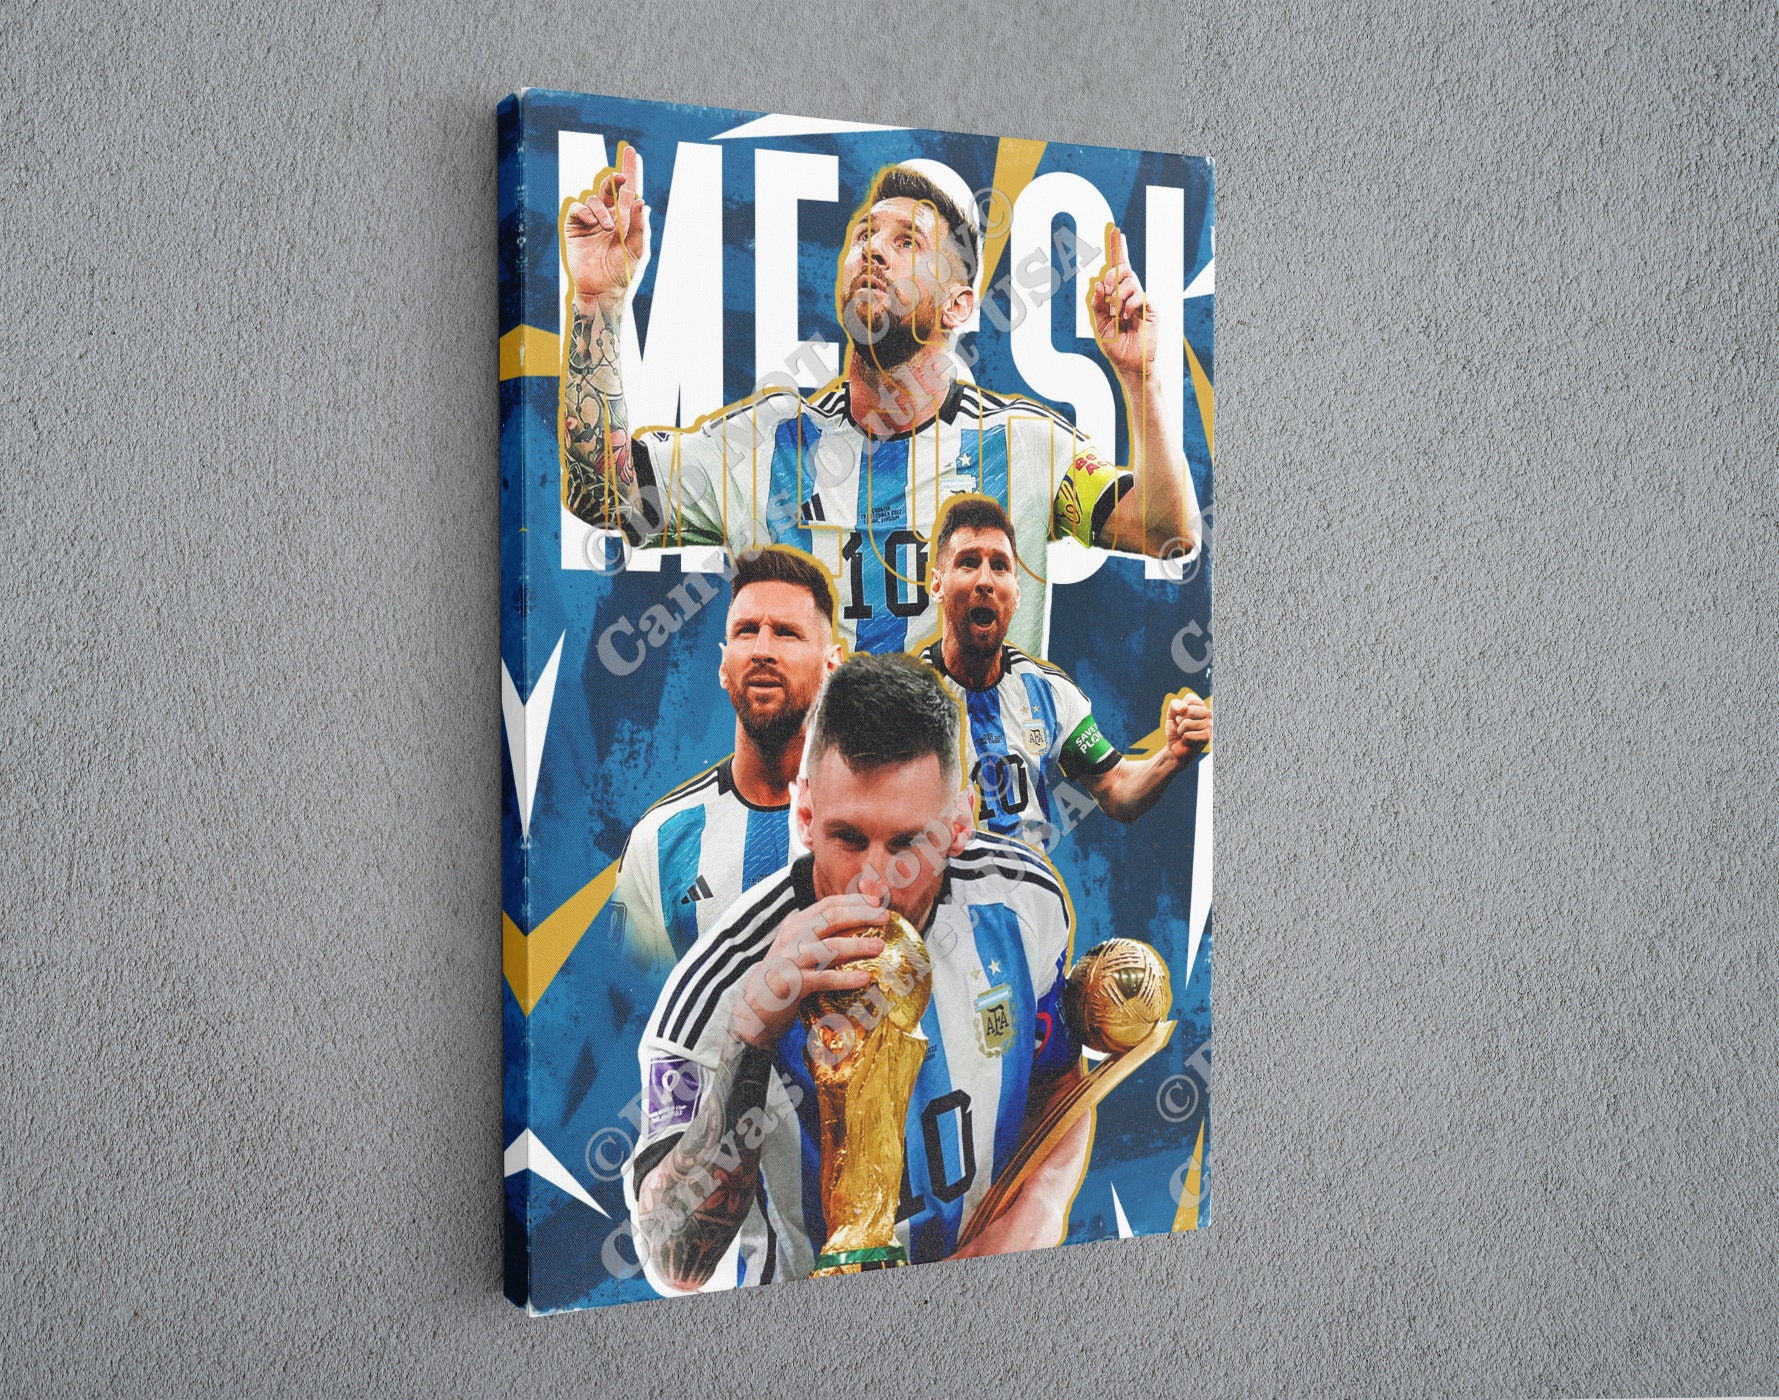 Lionel Messi Poster - PSG Football Player - Sports Wall Art Decor -  Football gift - Print Wall Greeting Card by Tjerk Sleeswijk Visser